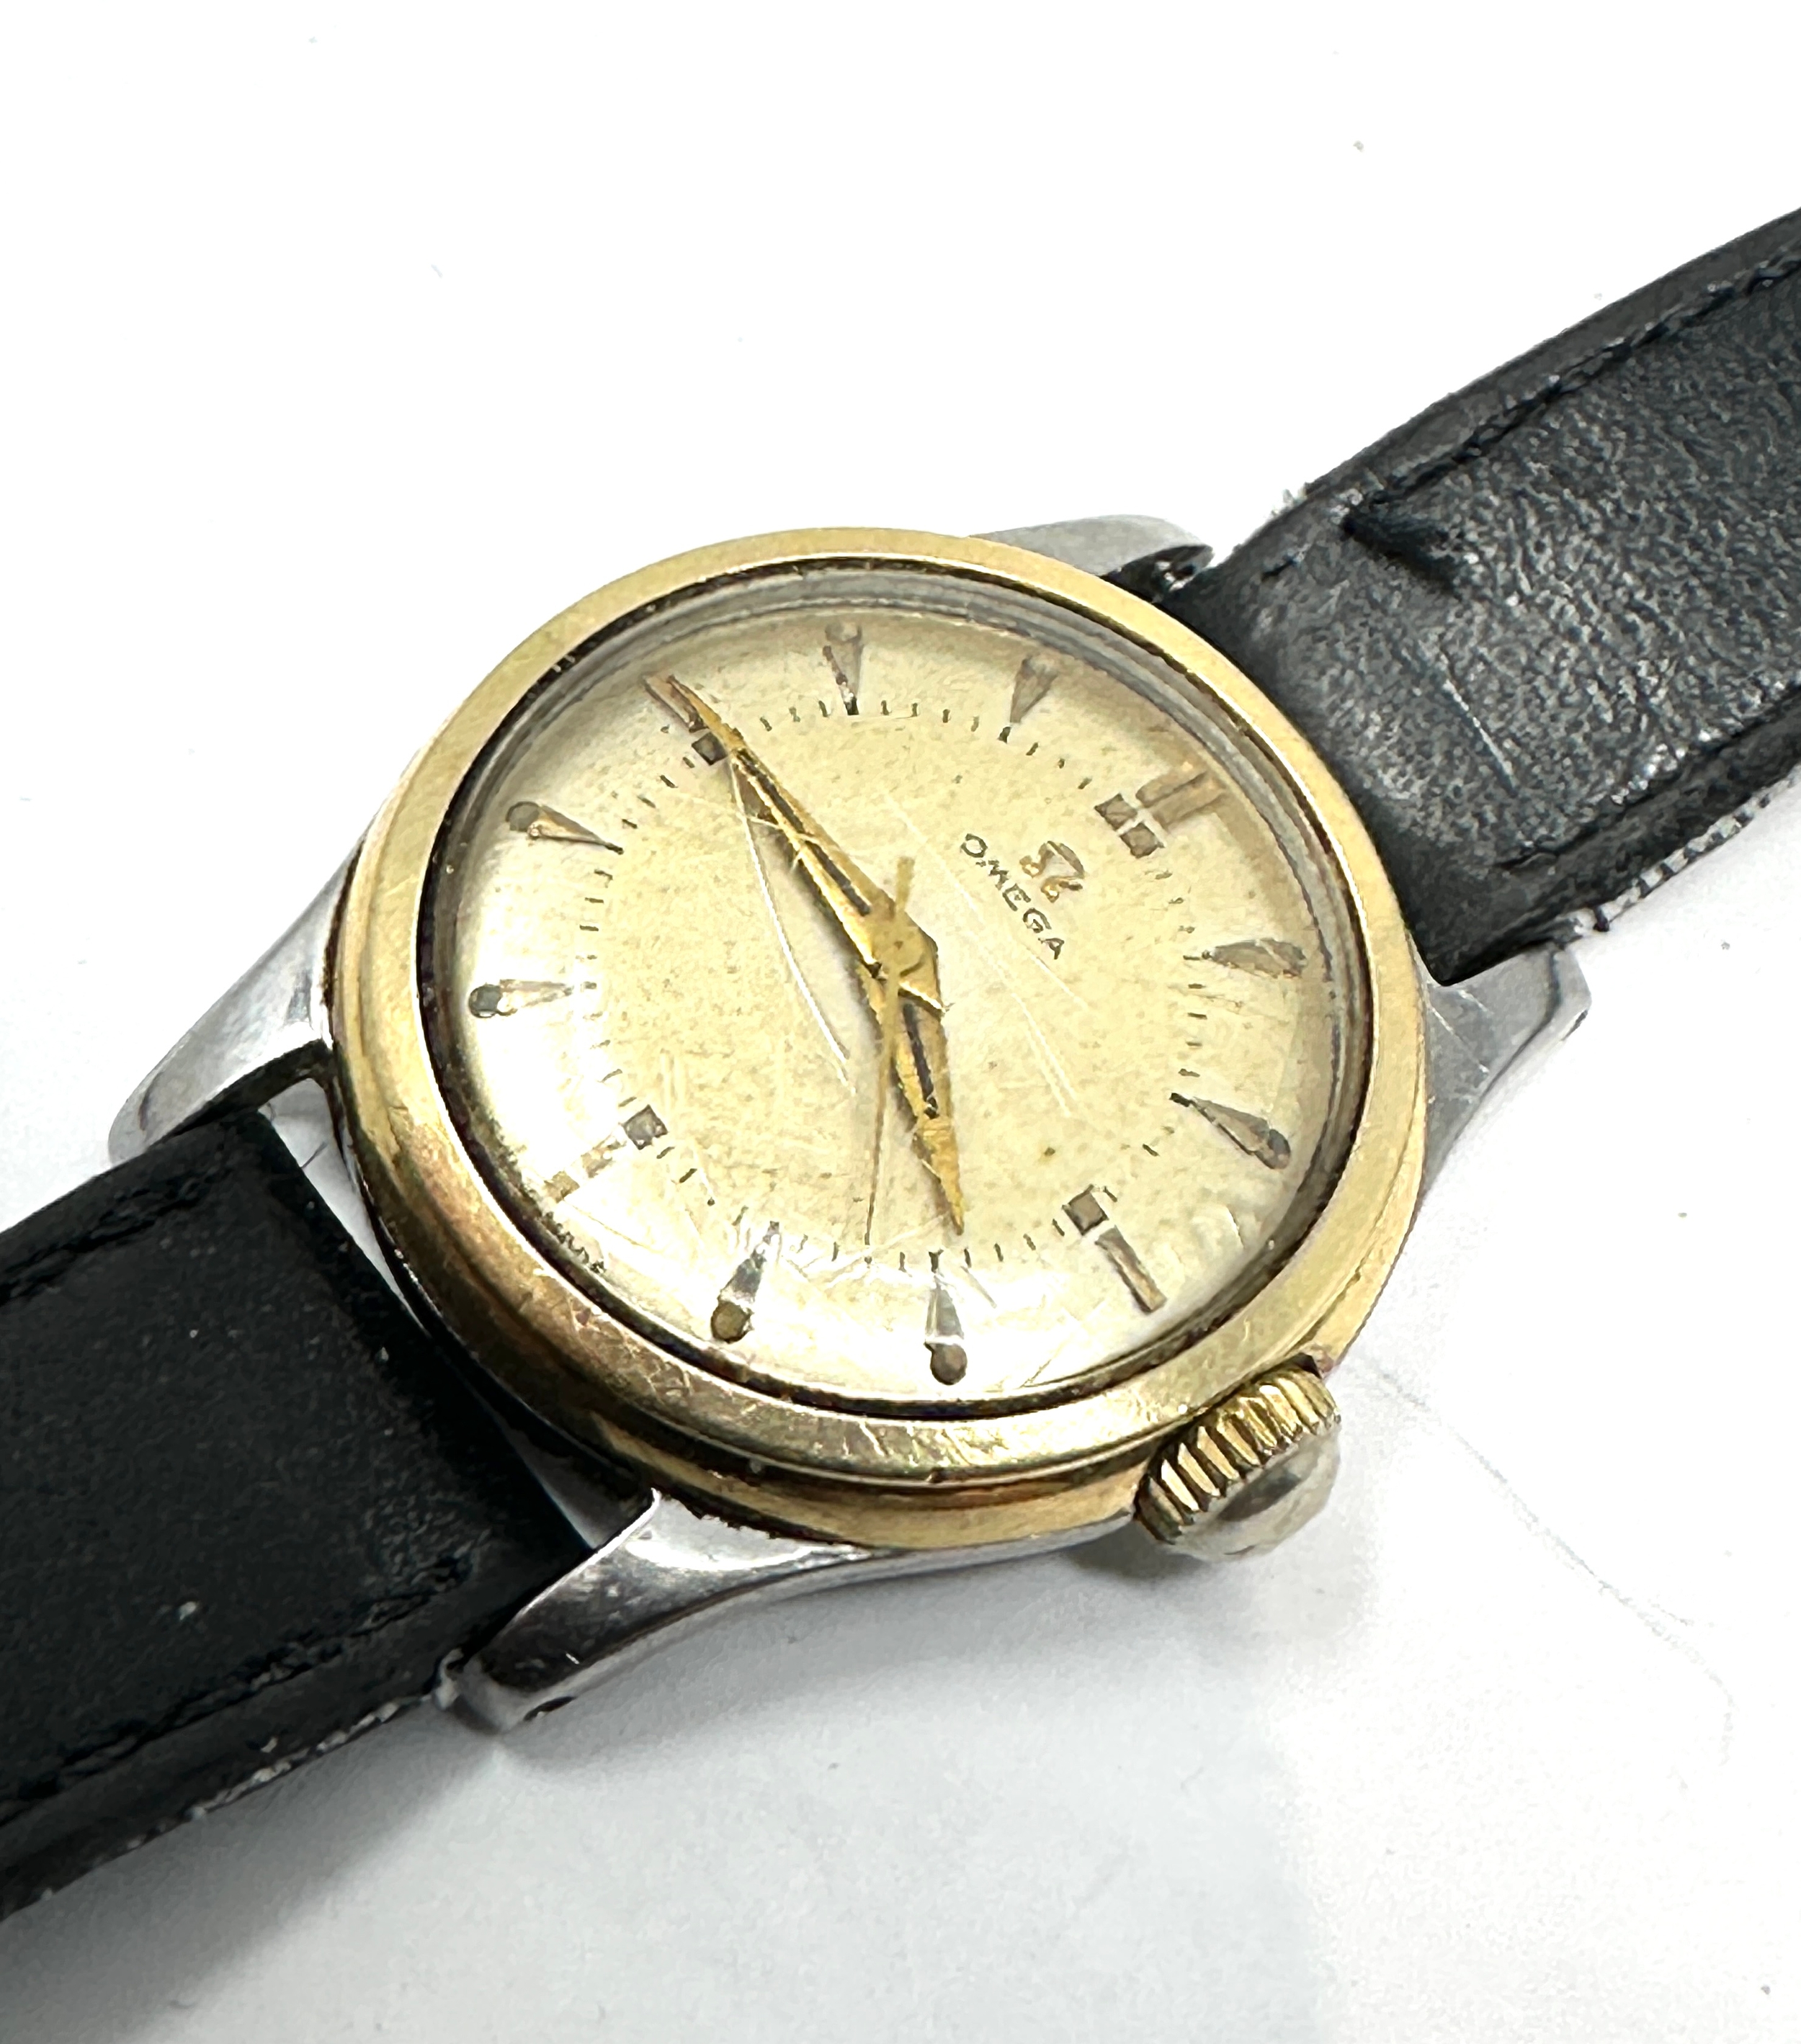 vintage ladies omega wristwatch cal 252 the watch ticks when shaken the winder keeps winding